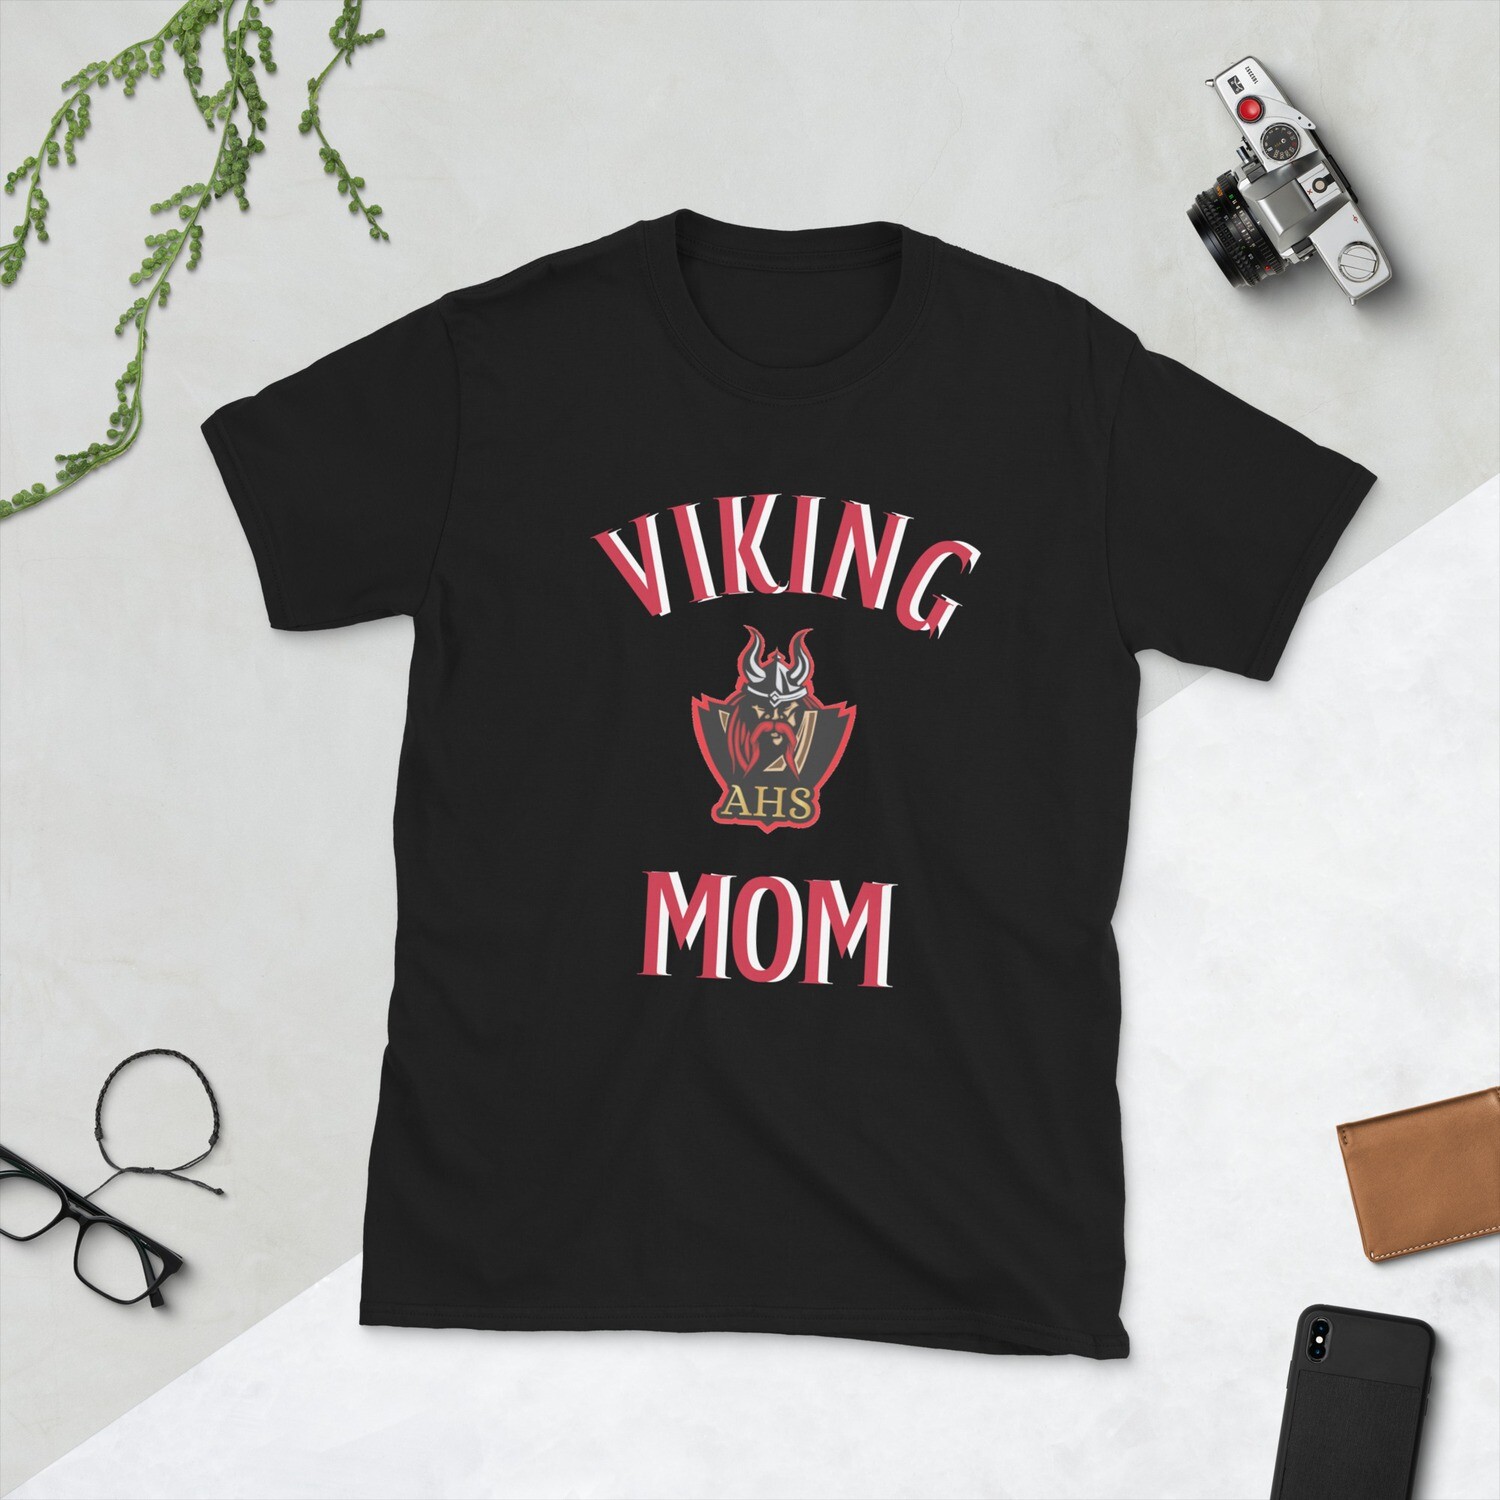 Women's Viking Mom T-Shirt - Black/Grey